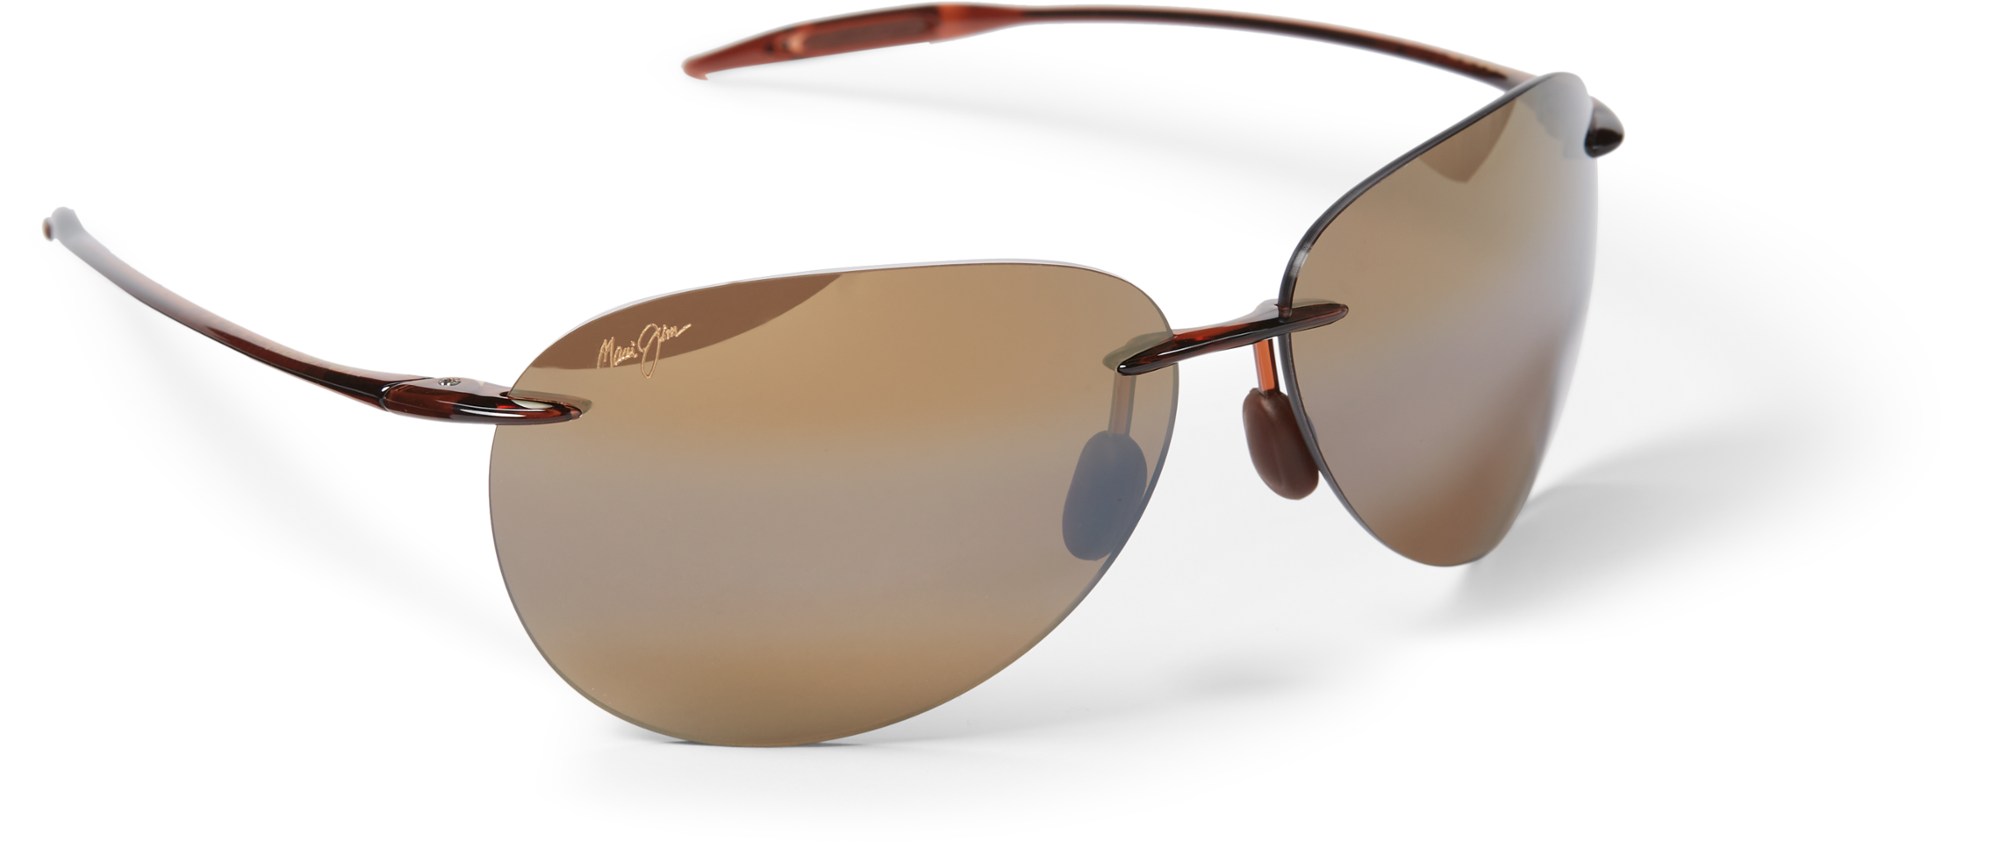 Поляризованные солнцезащитные очки Sugar Beach Maui Jim, коричневый солнцезащитные очки one way maui jim цвет dark navy stripe blue hawaii